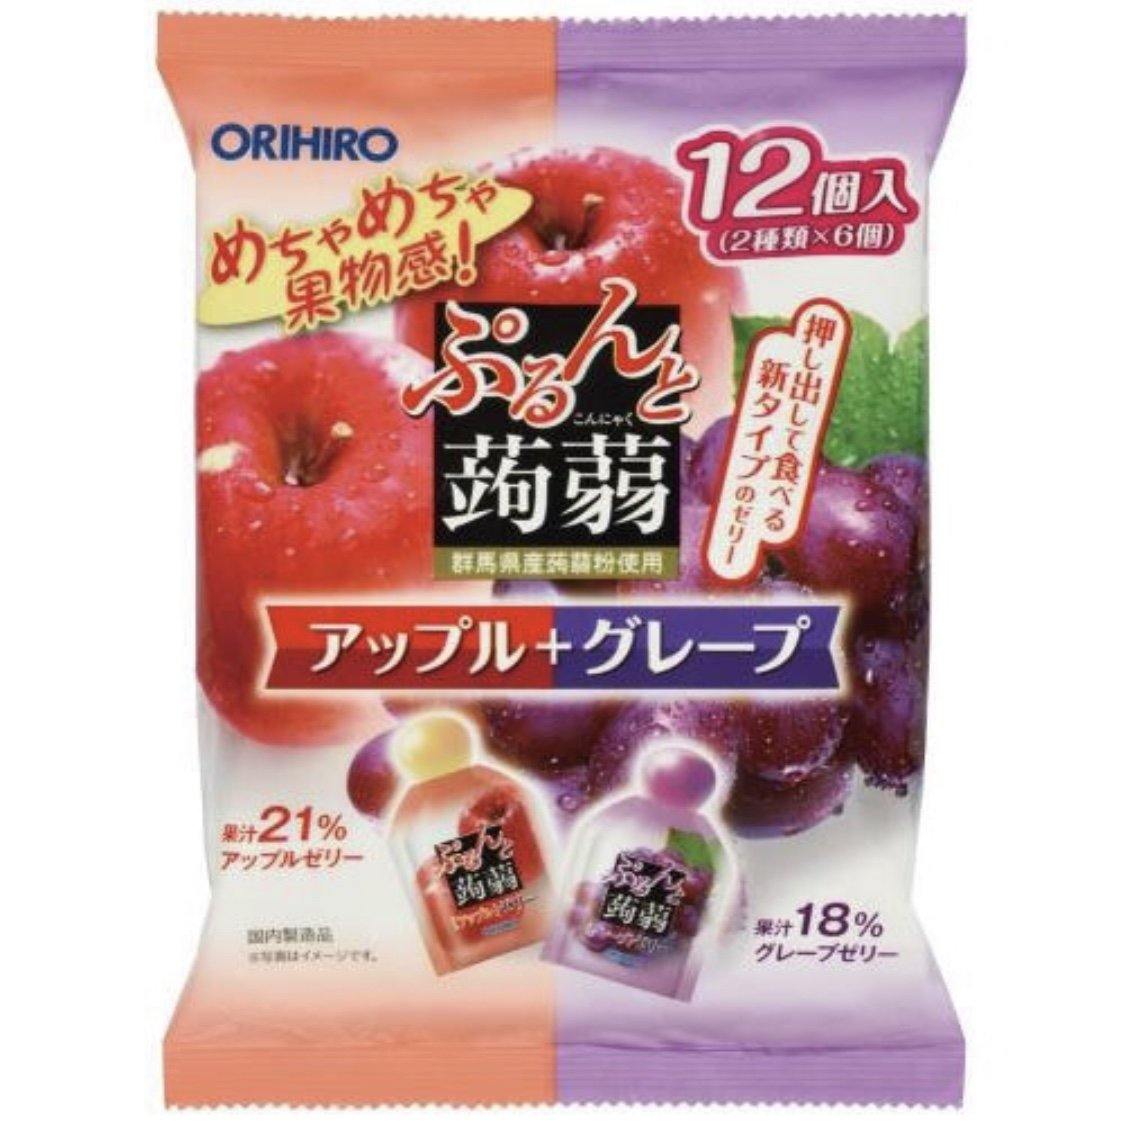 ORIHIRO PACKET KONNYAKU JELLY APPLE AND GRAPE 240 G - Premium Co.  Groceries 